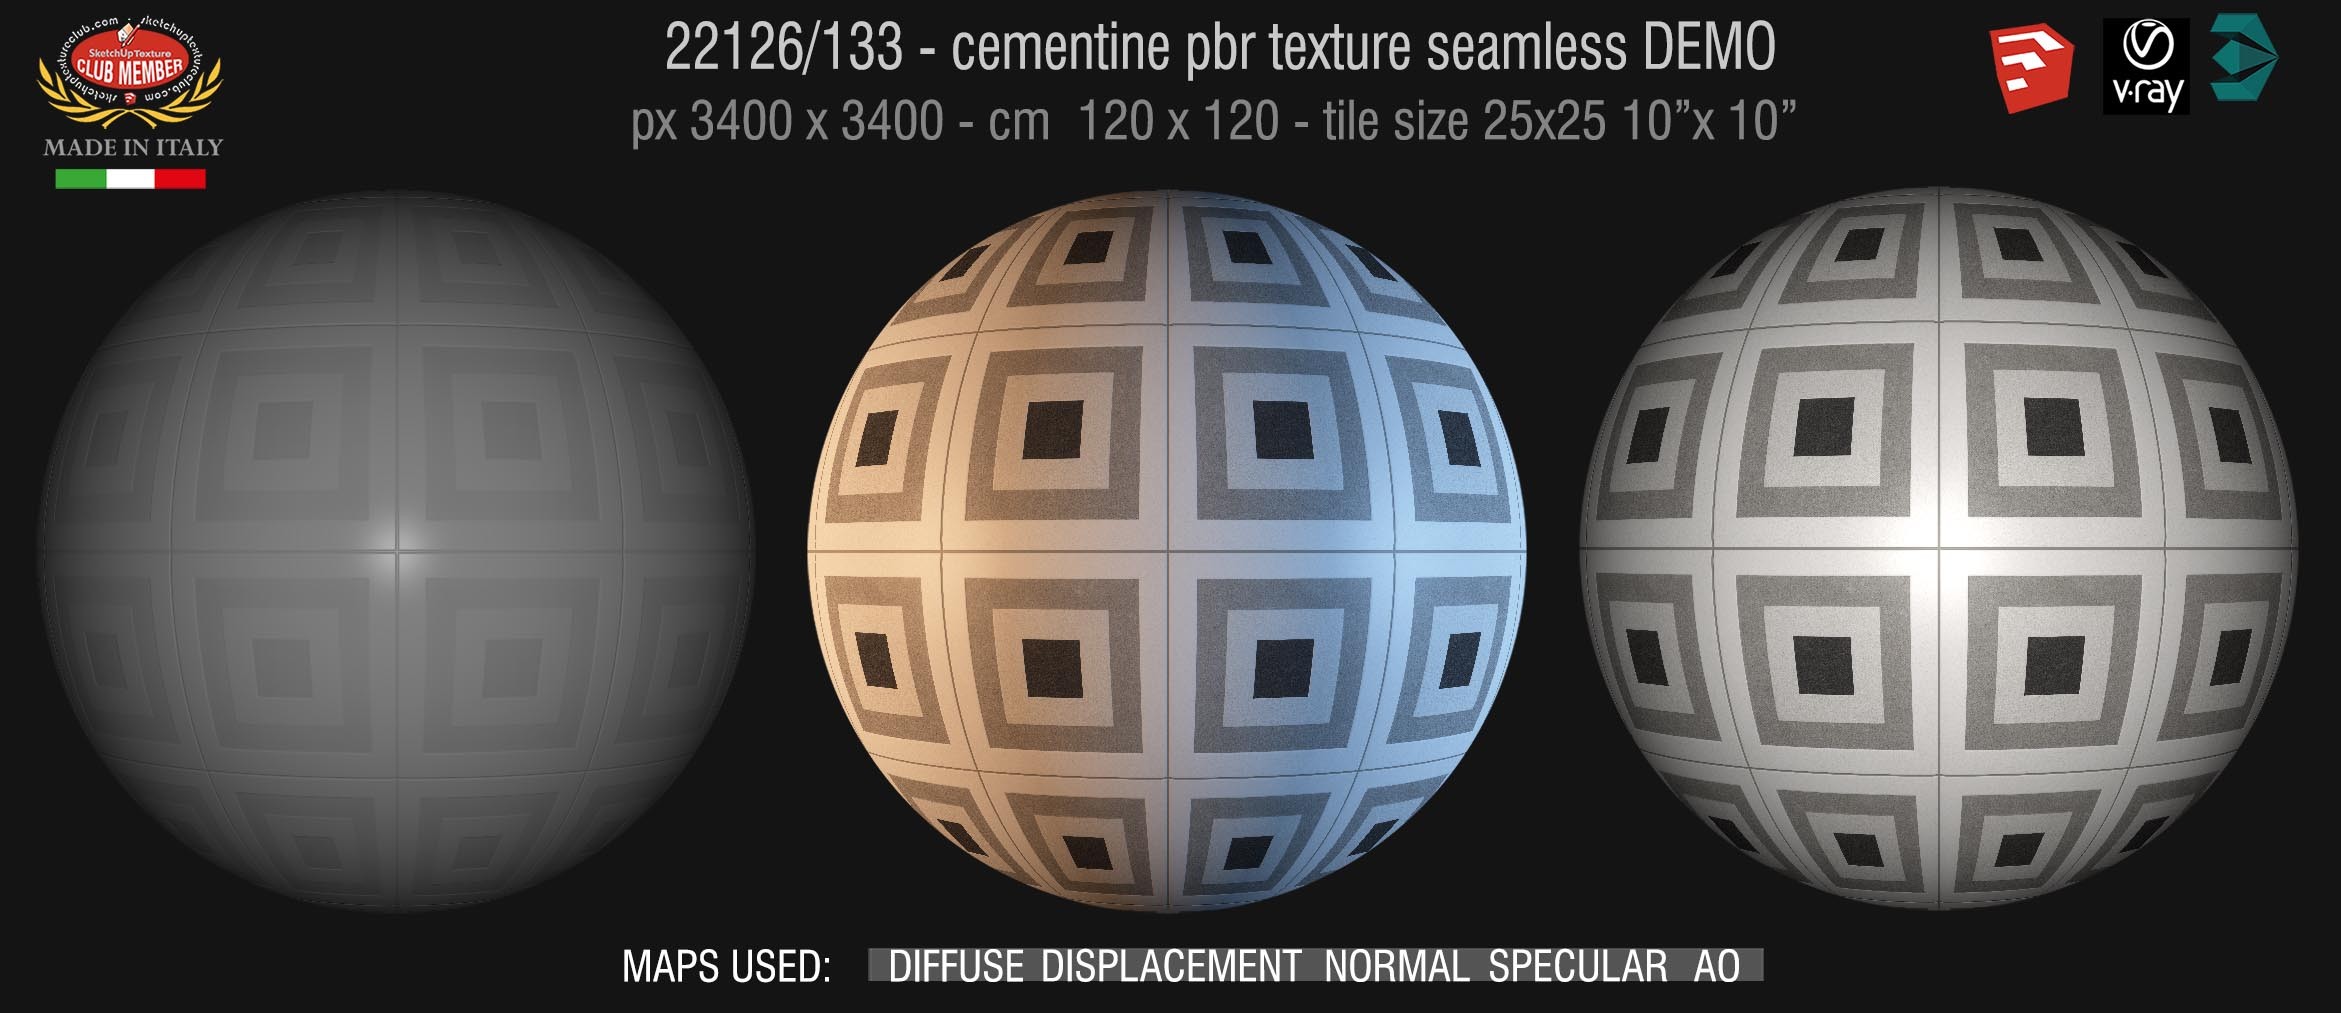 22126/133 cementine tiles Pbr seamless texture DEMO - porcelain stoneware concrete look